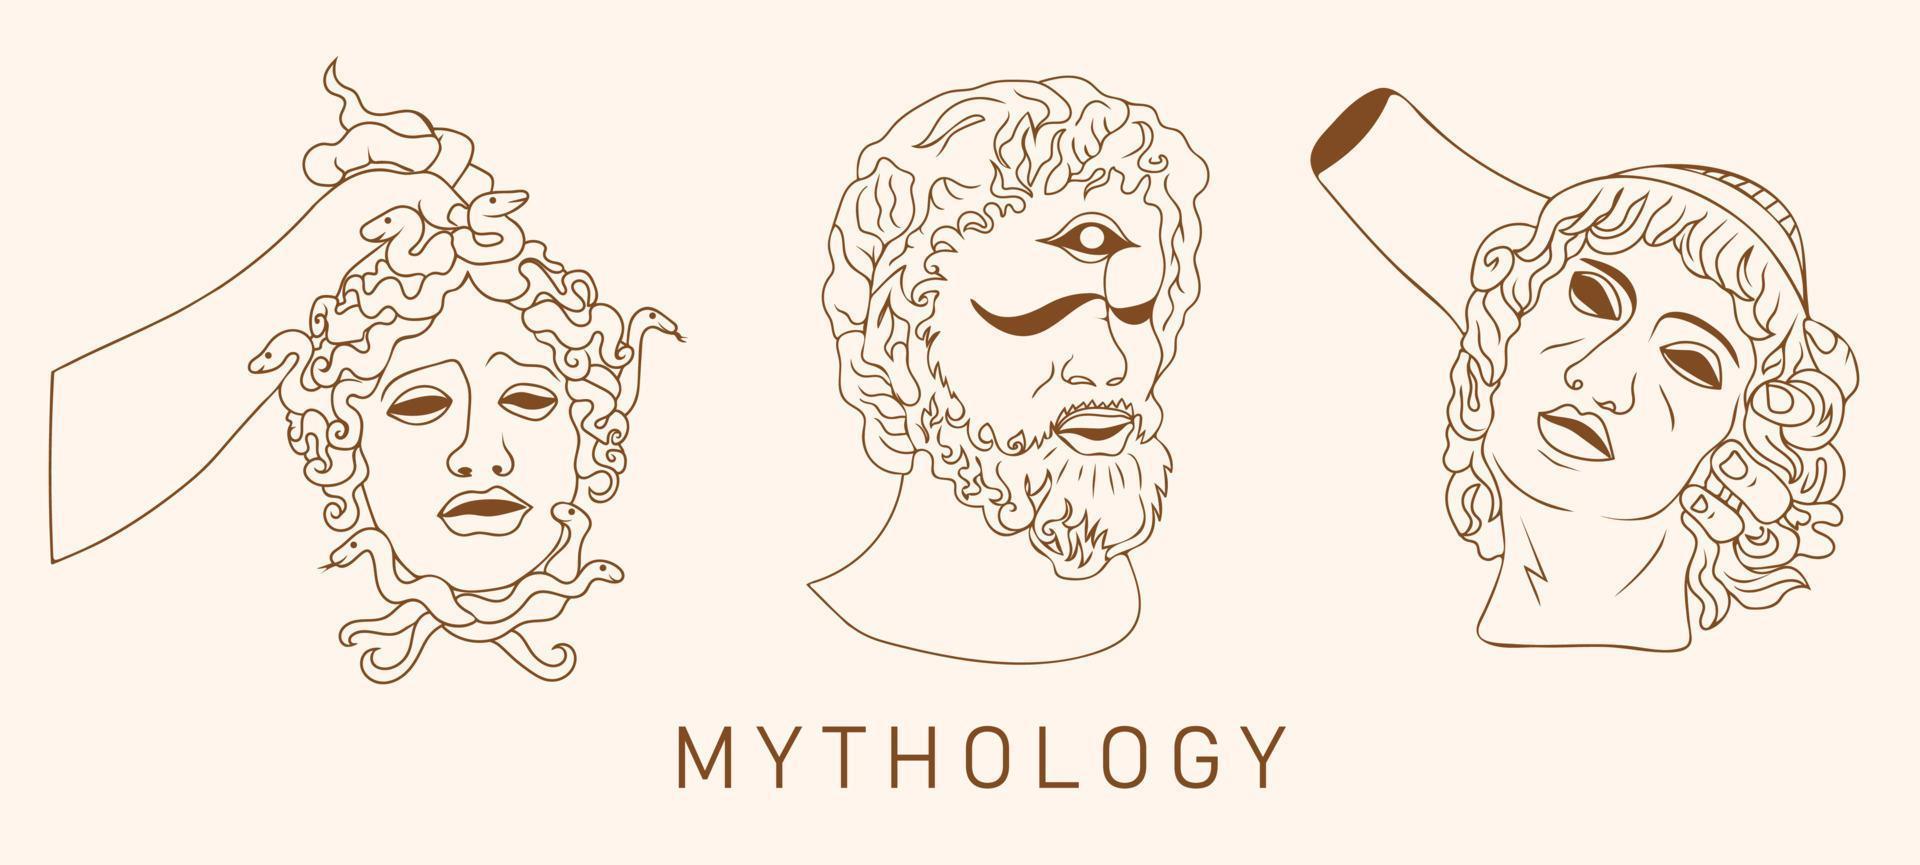 mitología. griego antiguo escultura colección vector